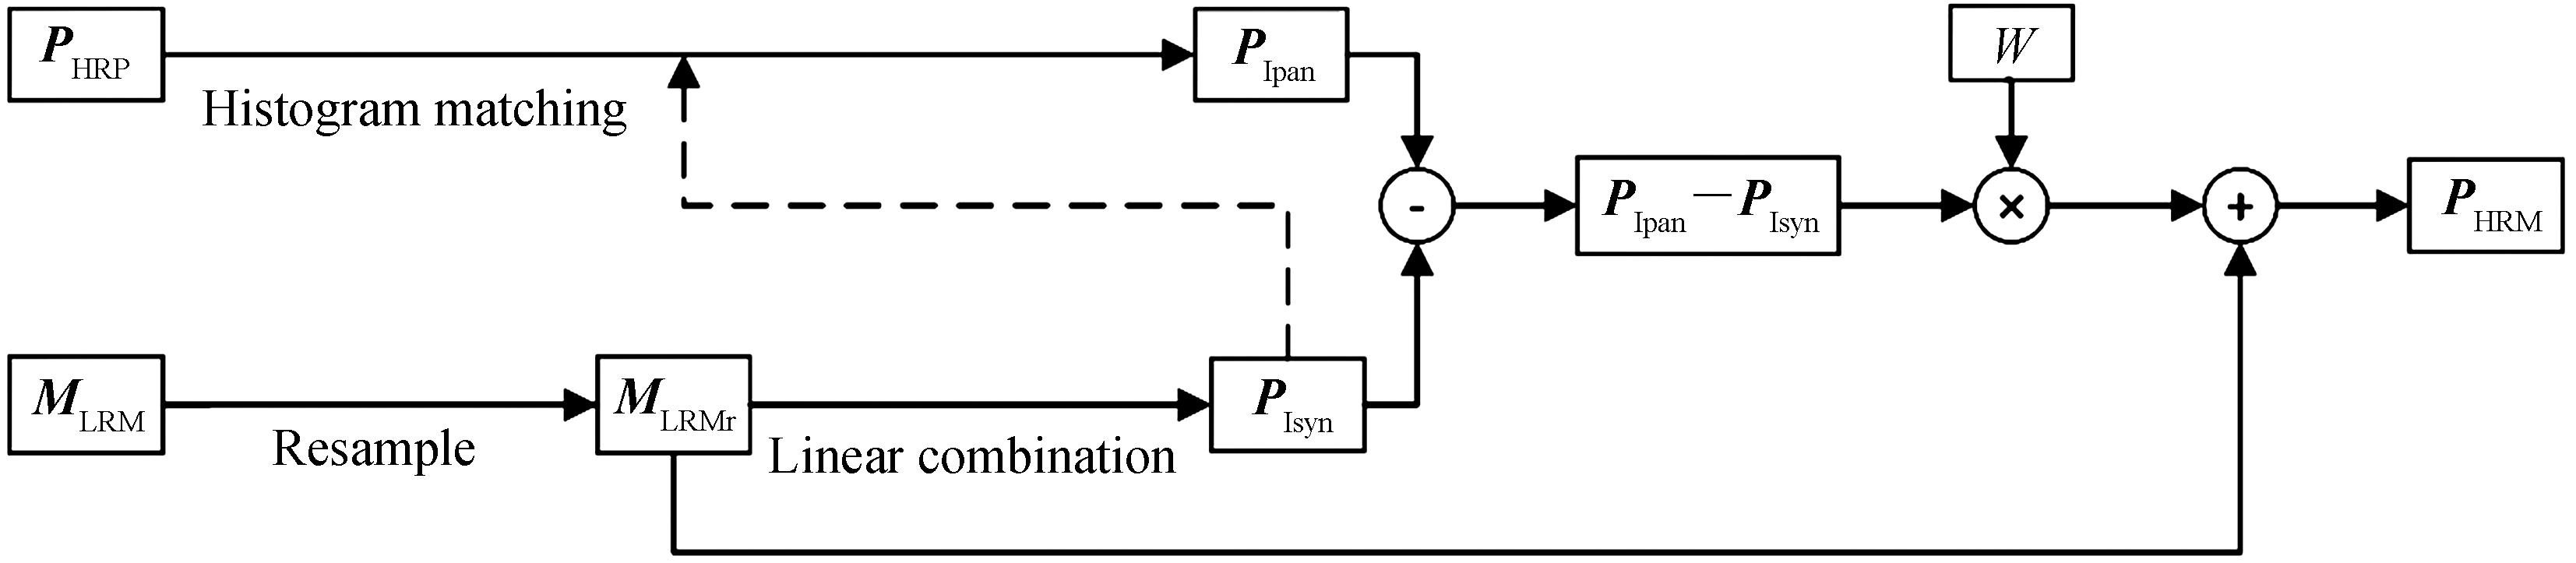 Flow chart of proposed remote sensing image fusion method